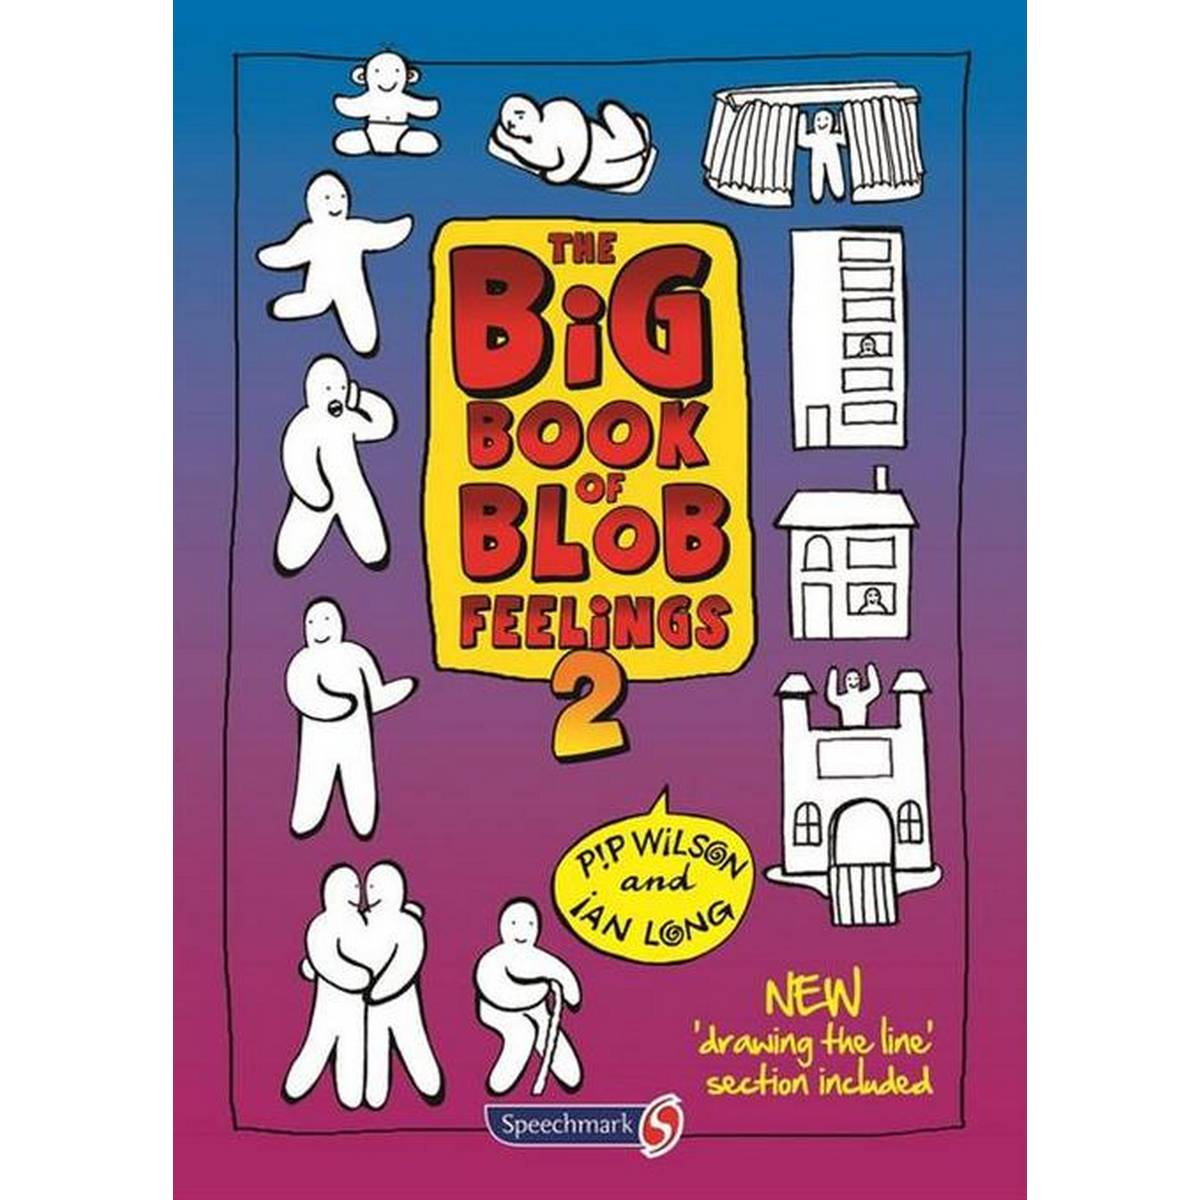 Big Book of Blob Feelings 2